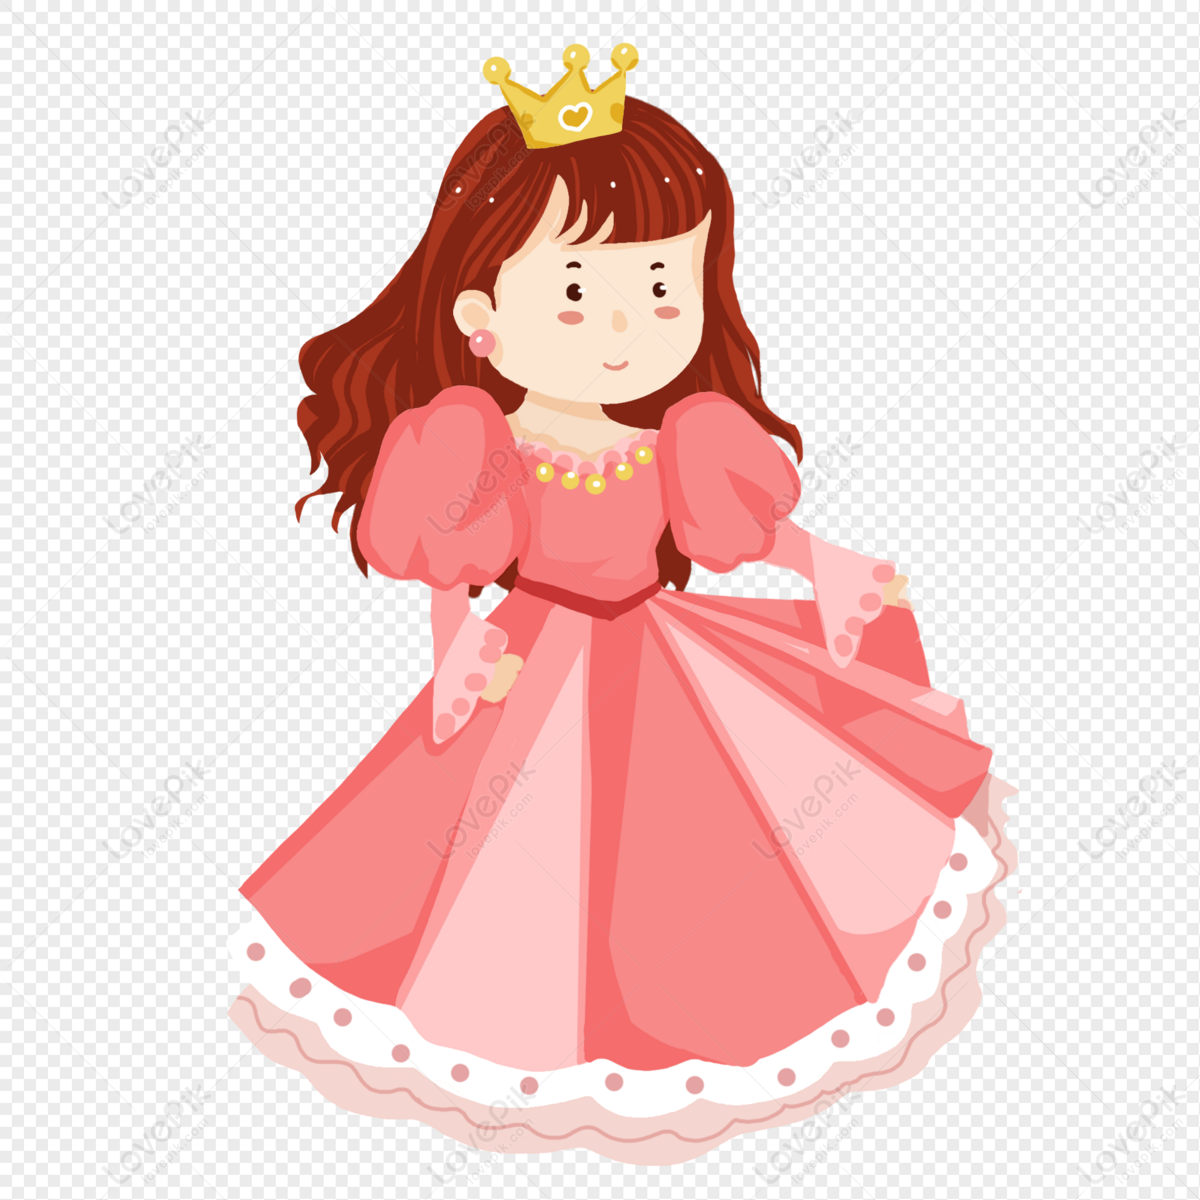 Little princess, princess, girl, happy png image